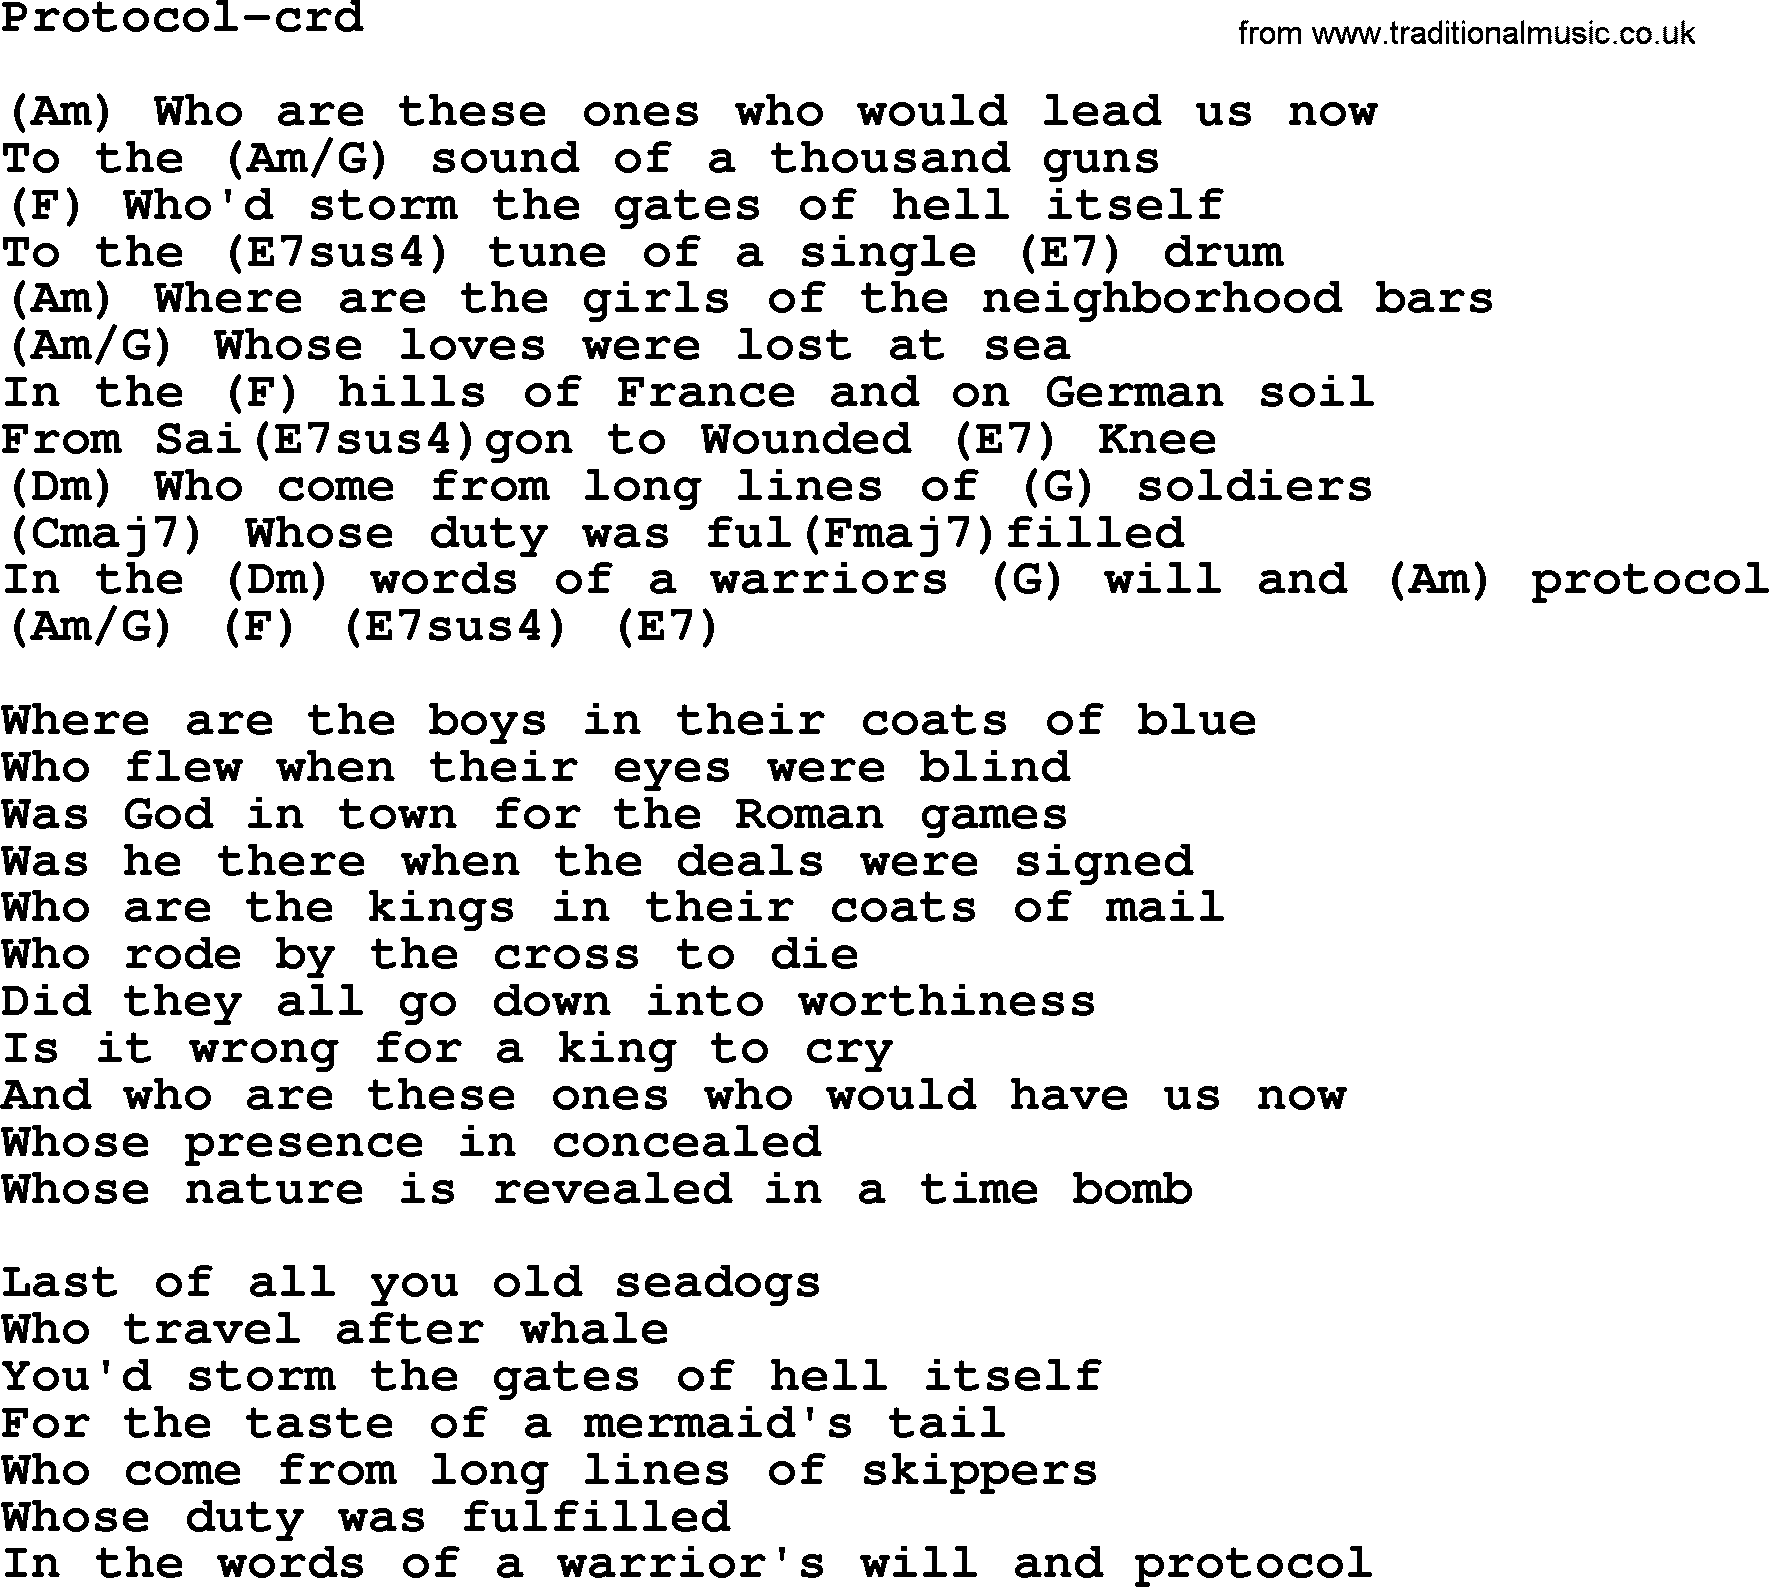 Gordon Lightfoot song Protocol, lyrics and chords